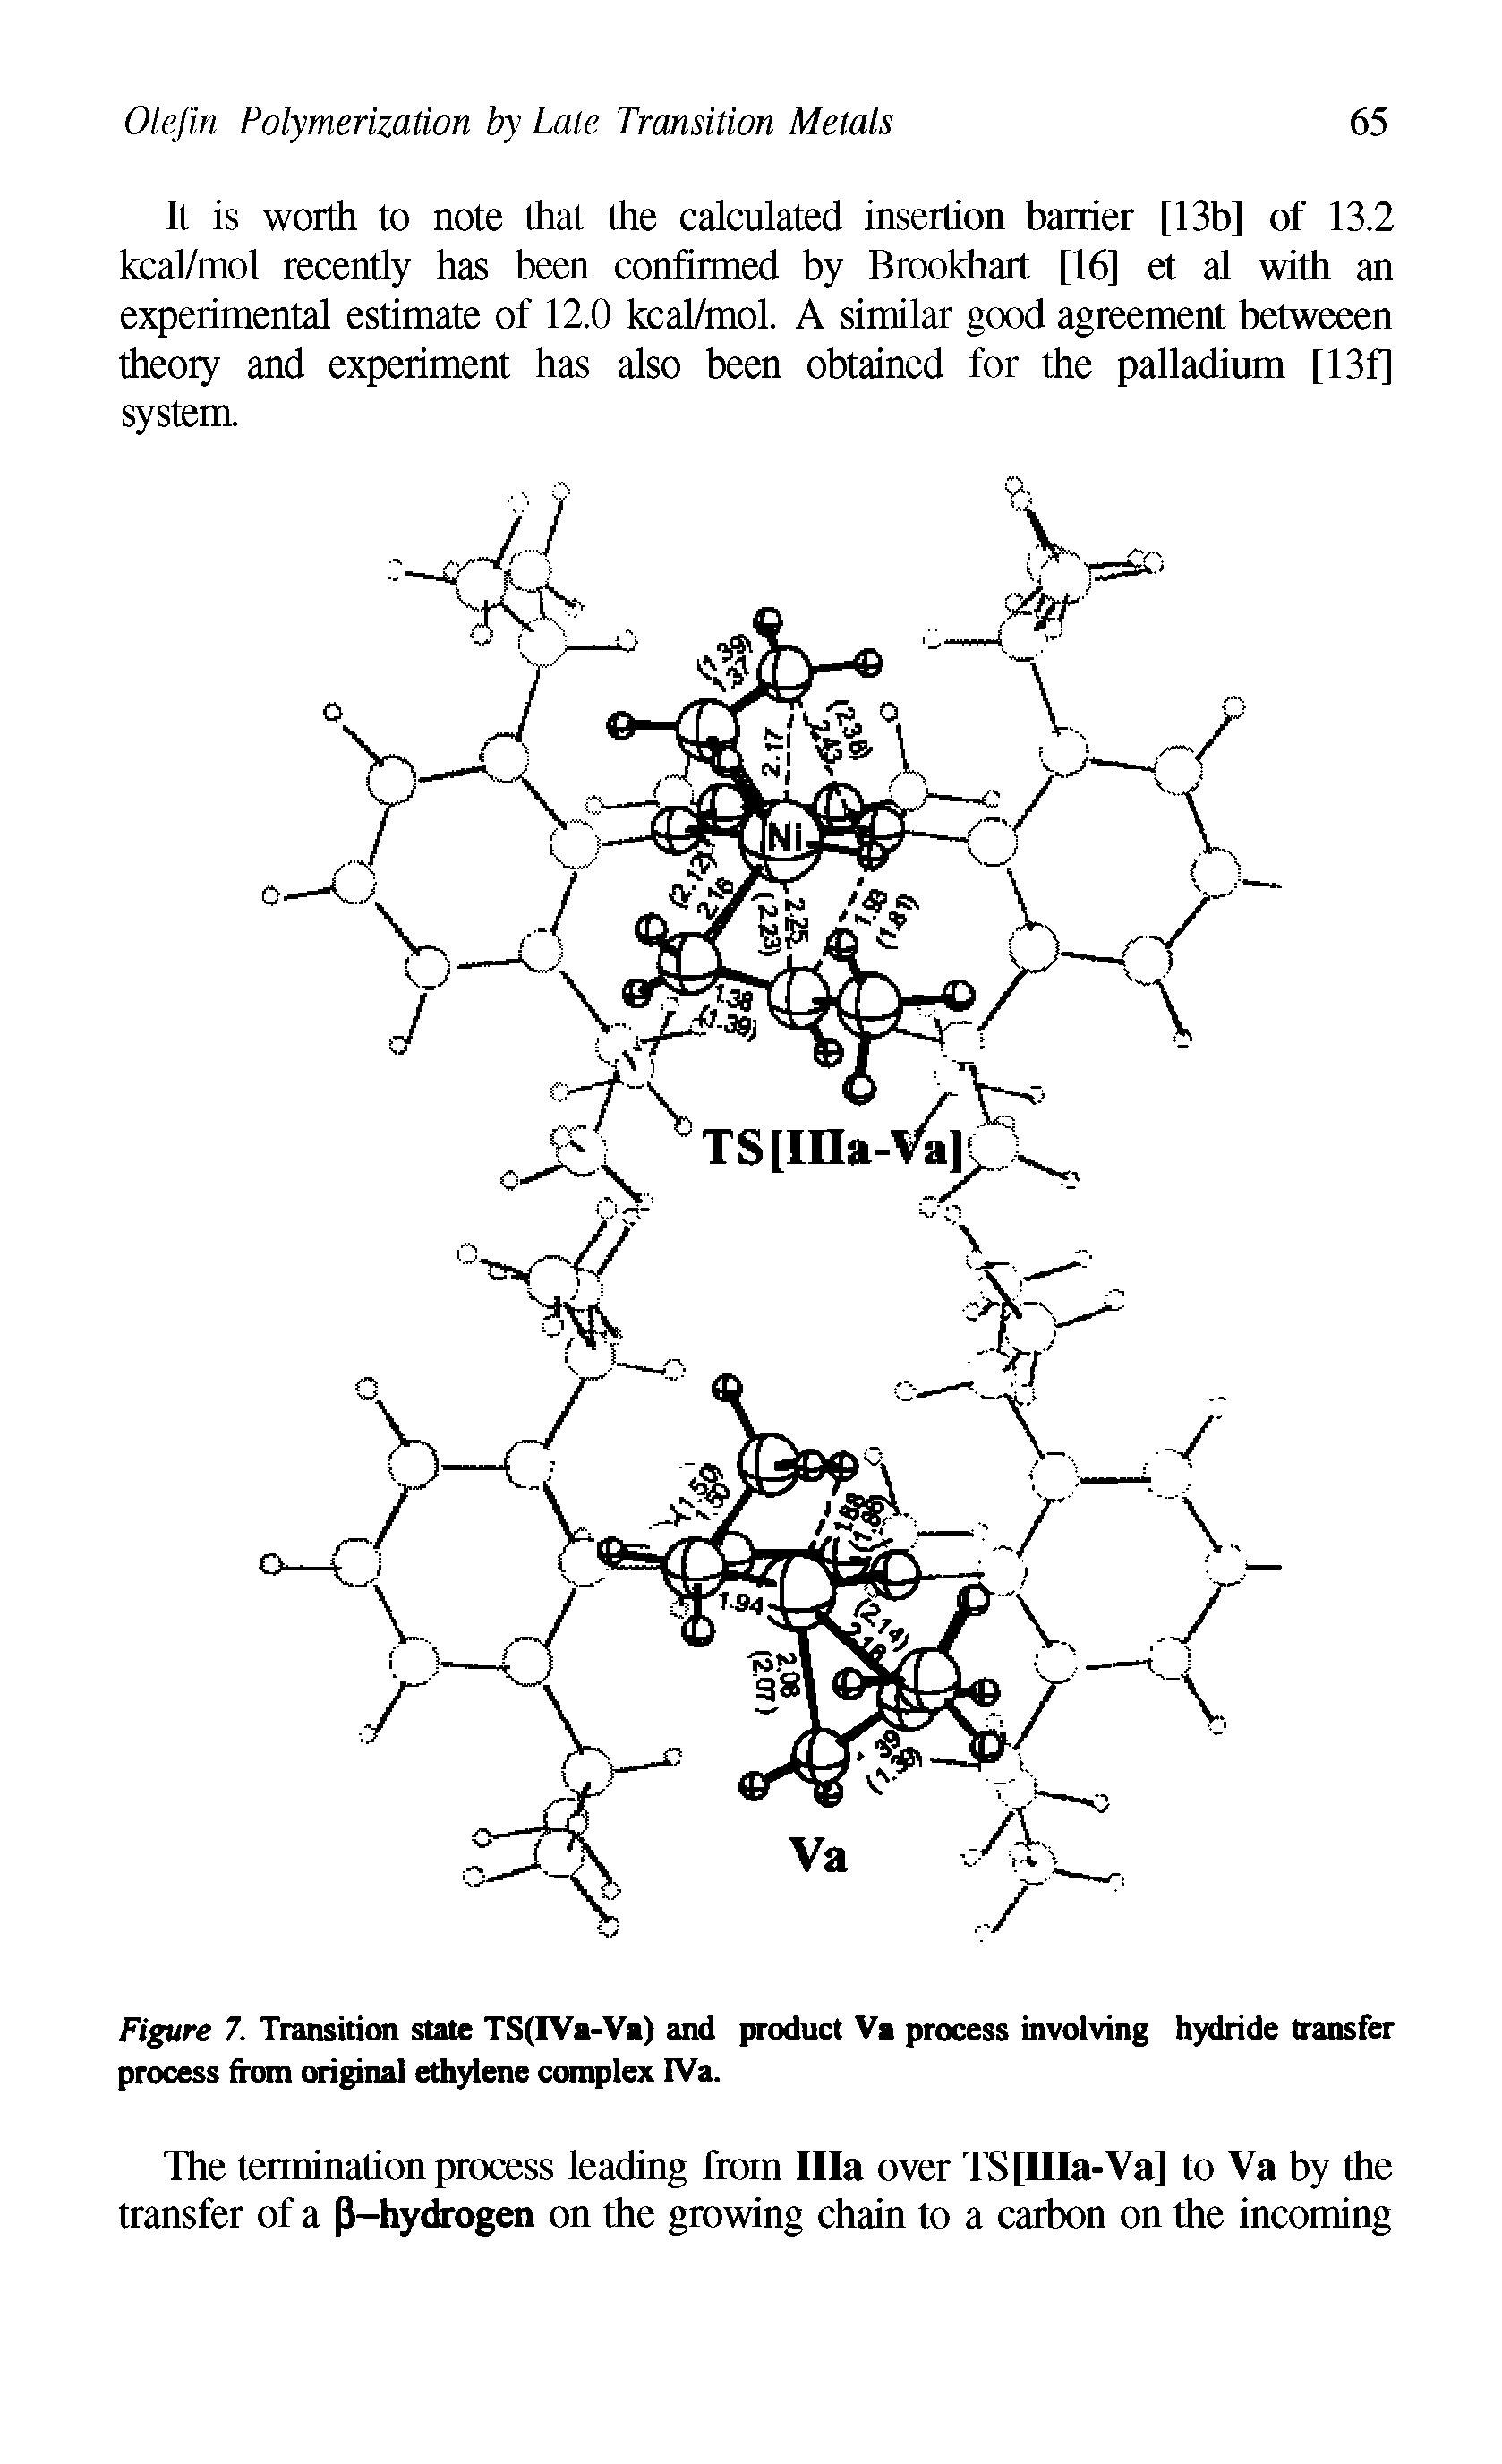 Figure 7. Transition state TS(IVa-Va) and product Va process involving hydride transfer process from original ethylene complex IVa.